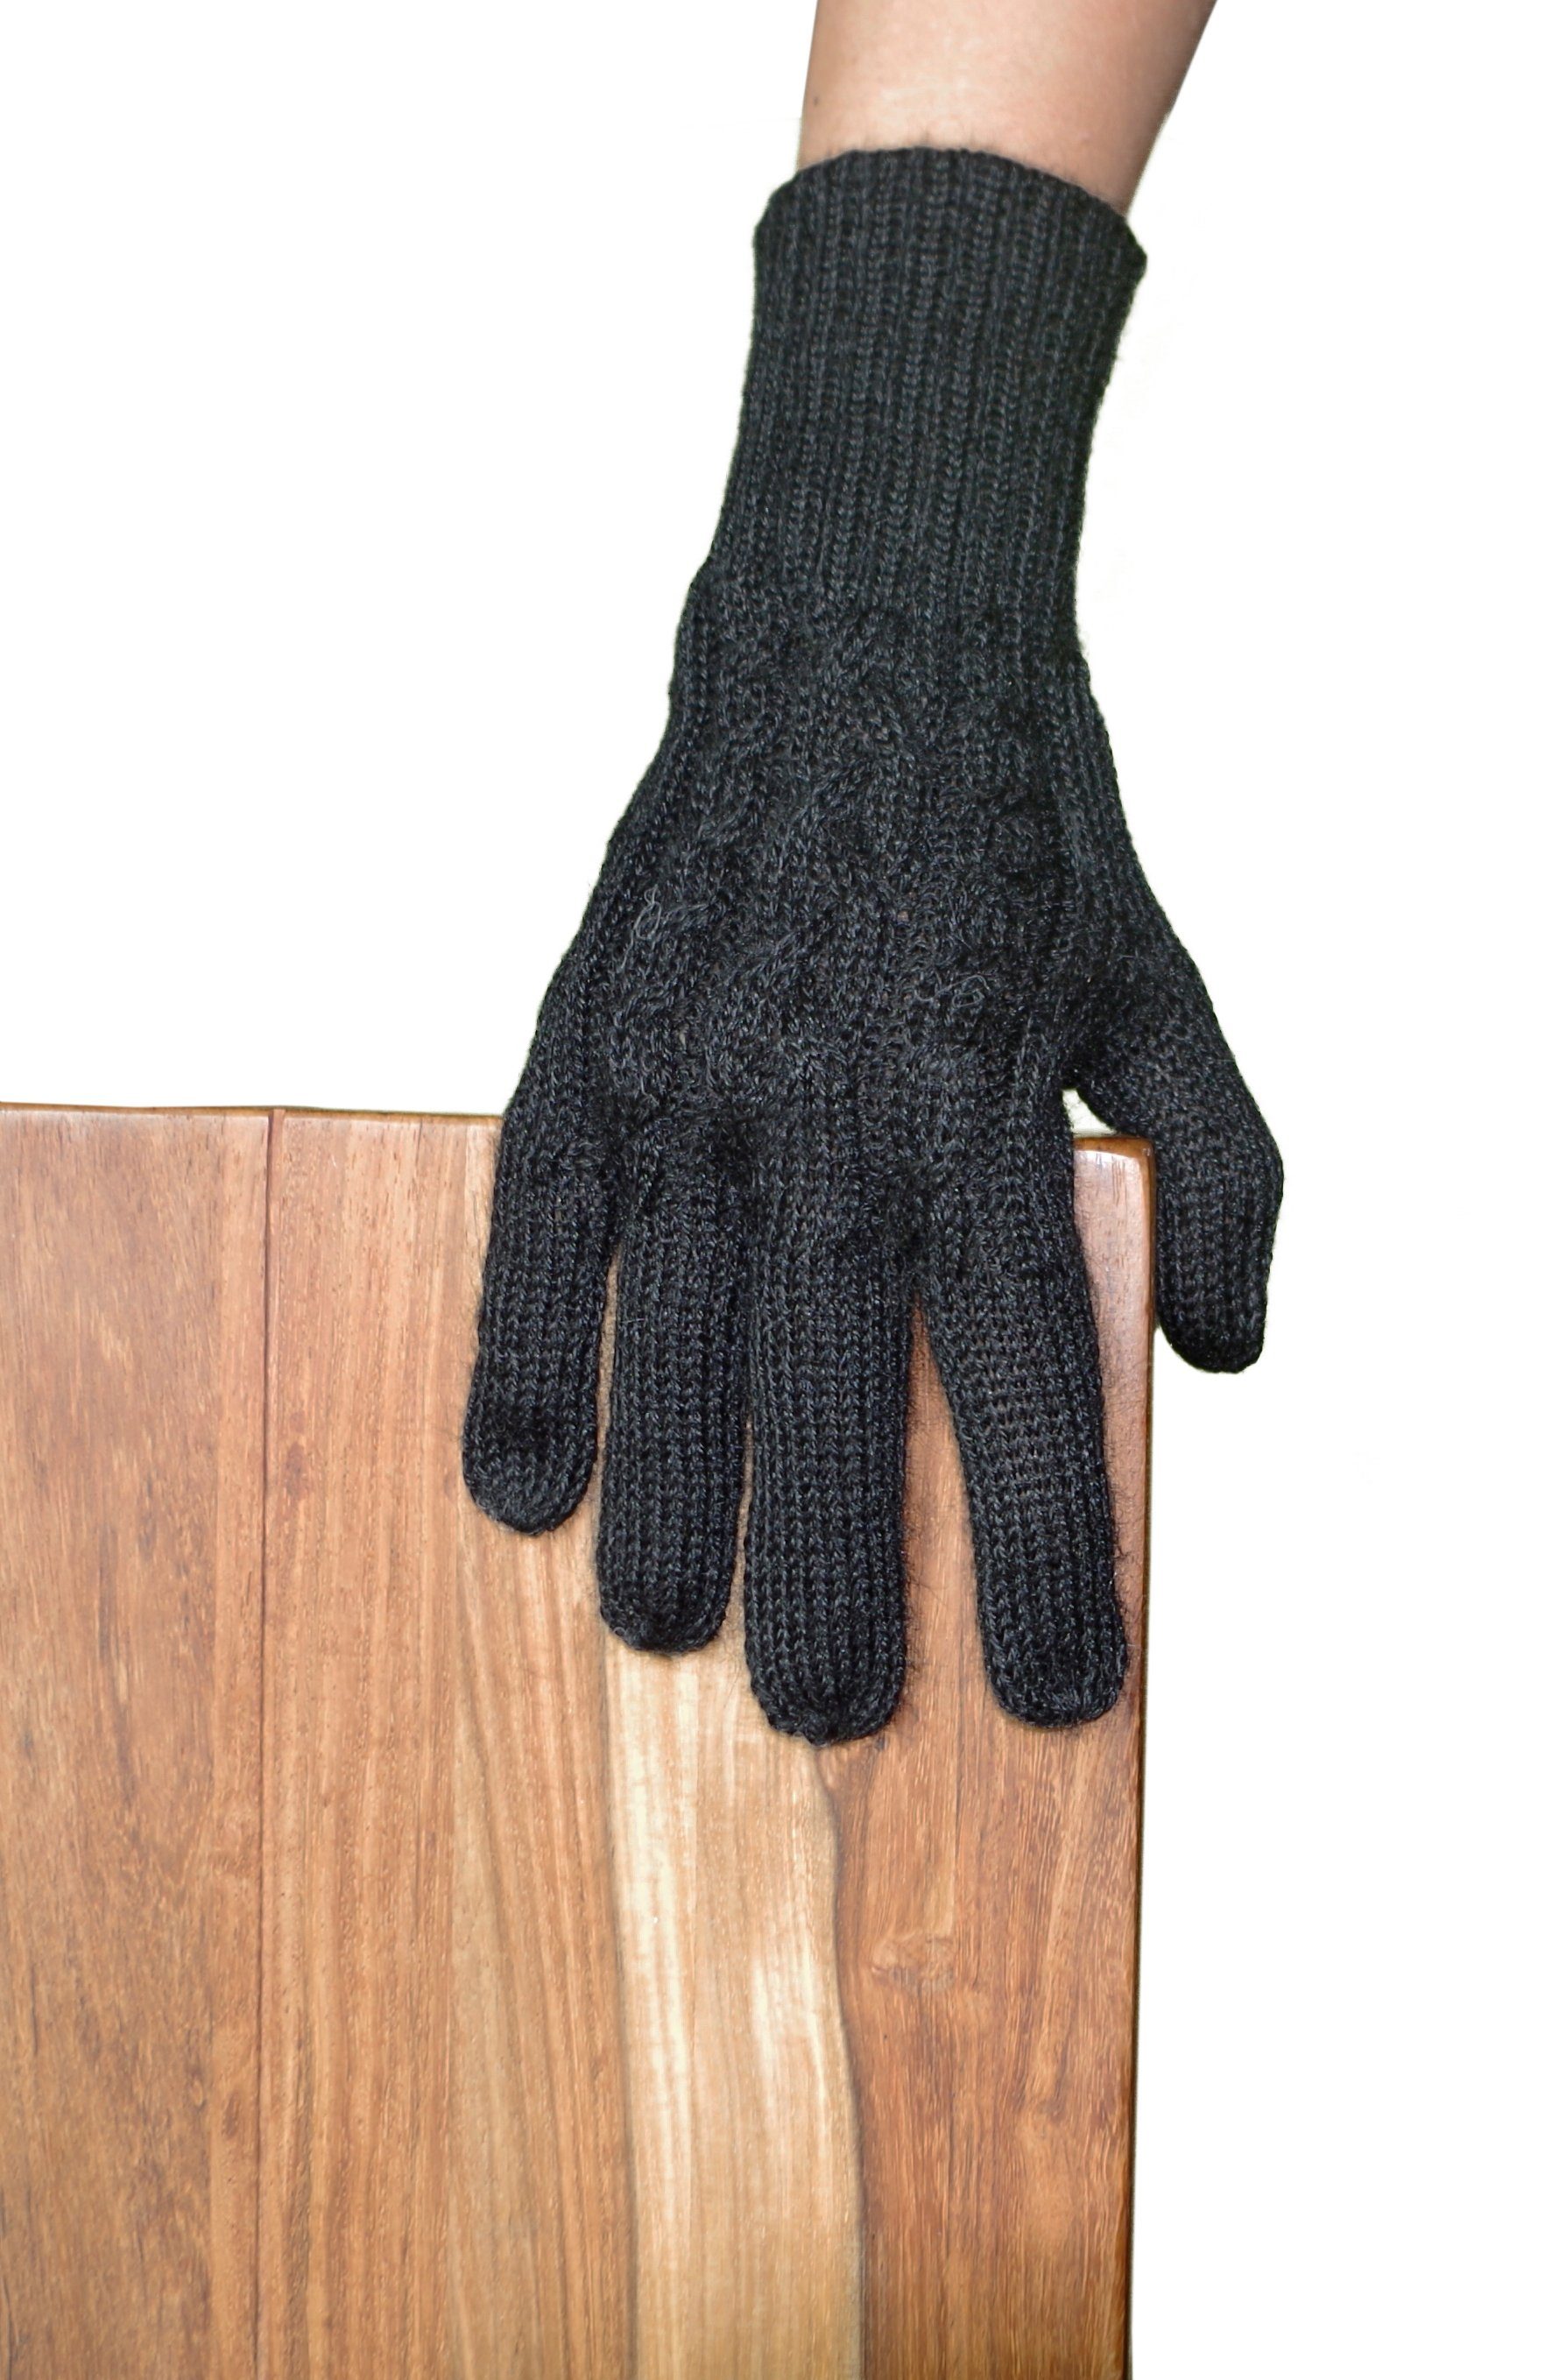 Posh Gear Strickhandschuhe 100% Alpakawolle Guantibrada schwarz Alpaka Fingerhandschuhe aus